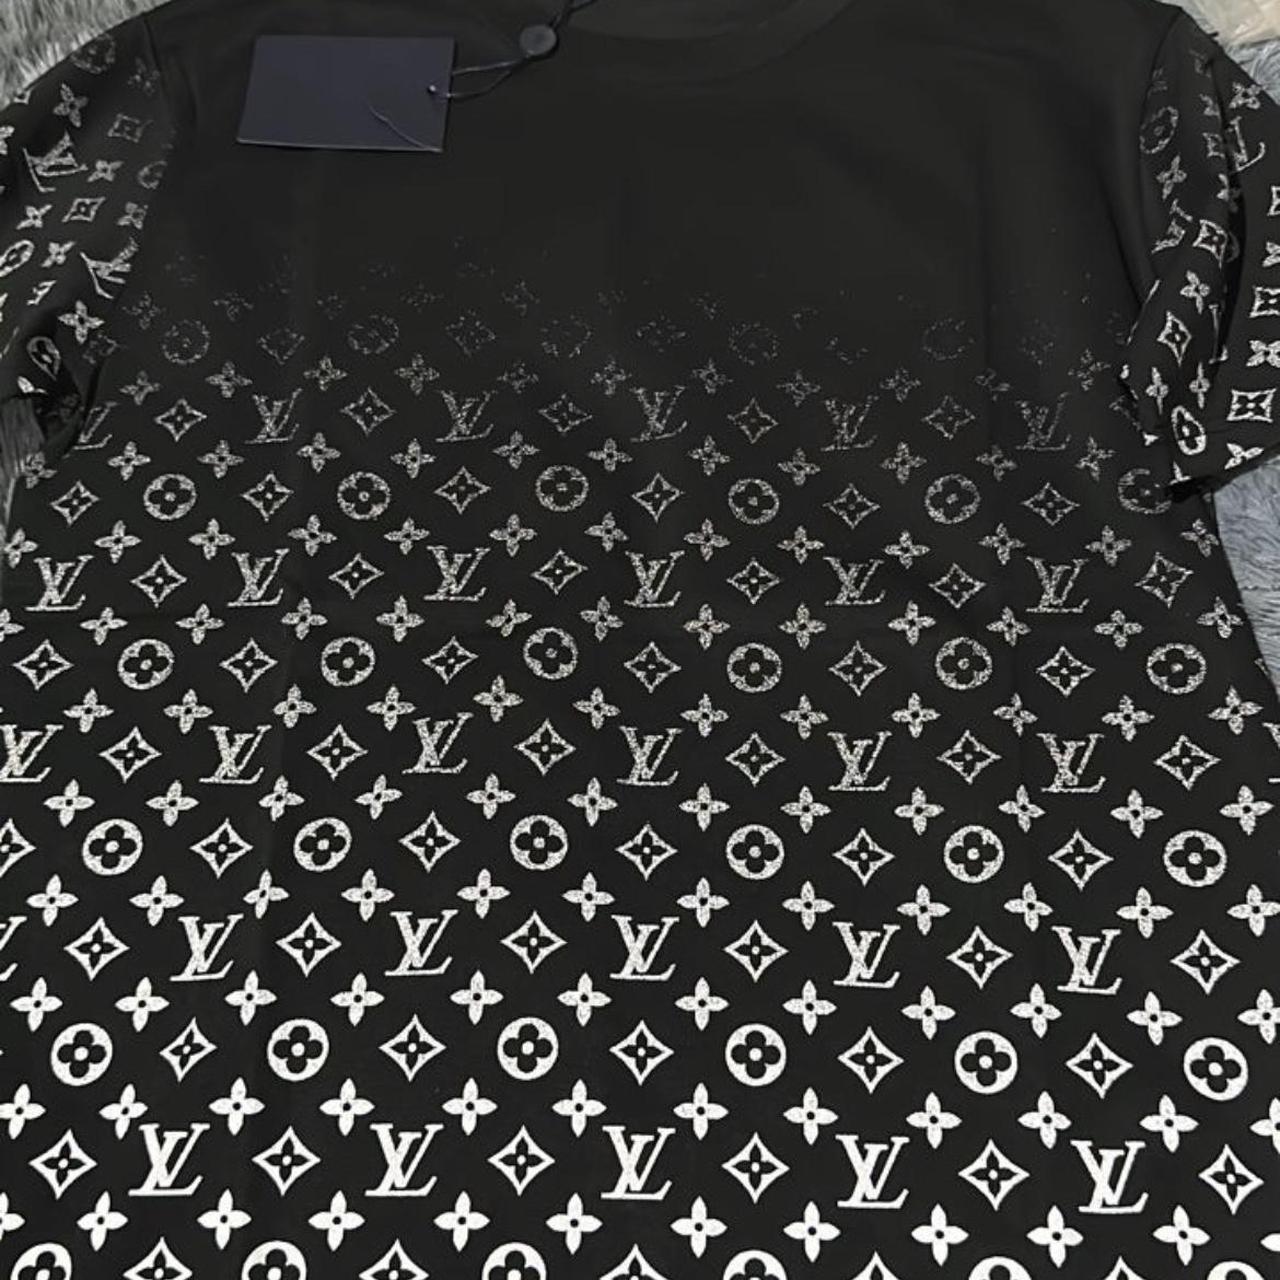 Louis Vuitton 2054 3D monogram pocket t shirt. - - Depop